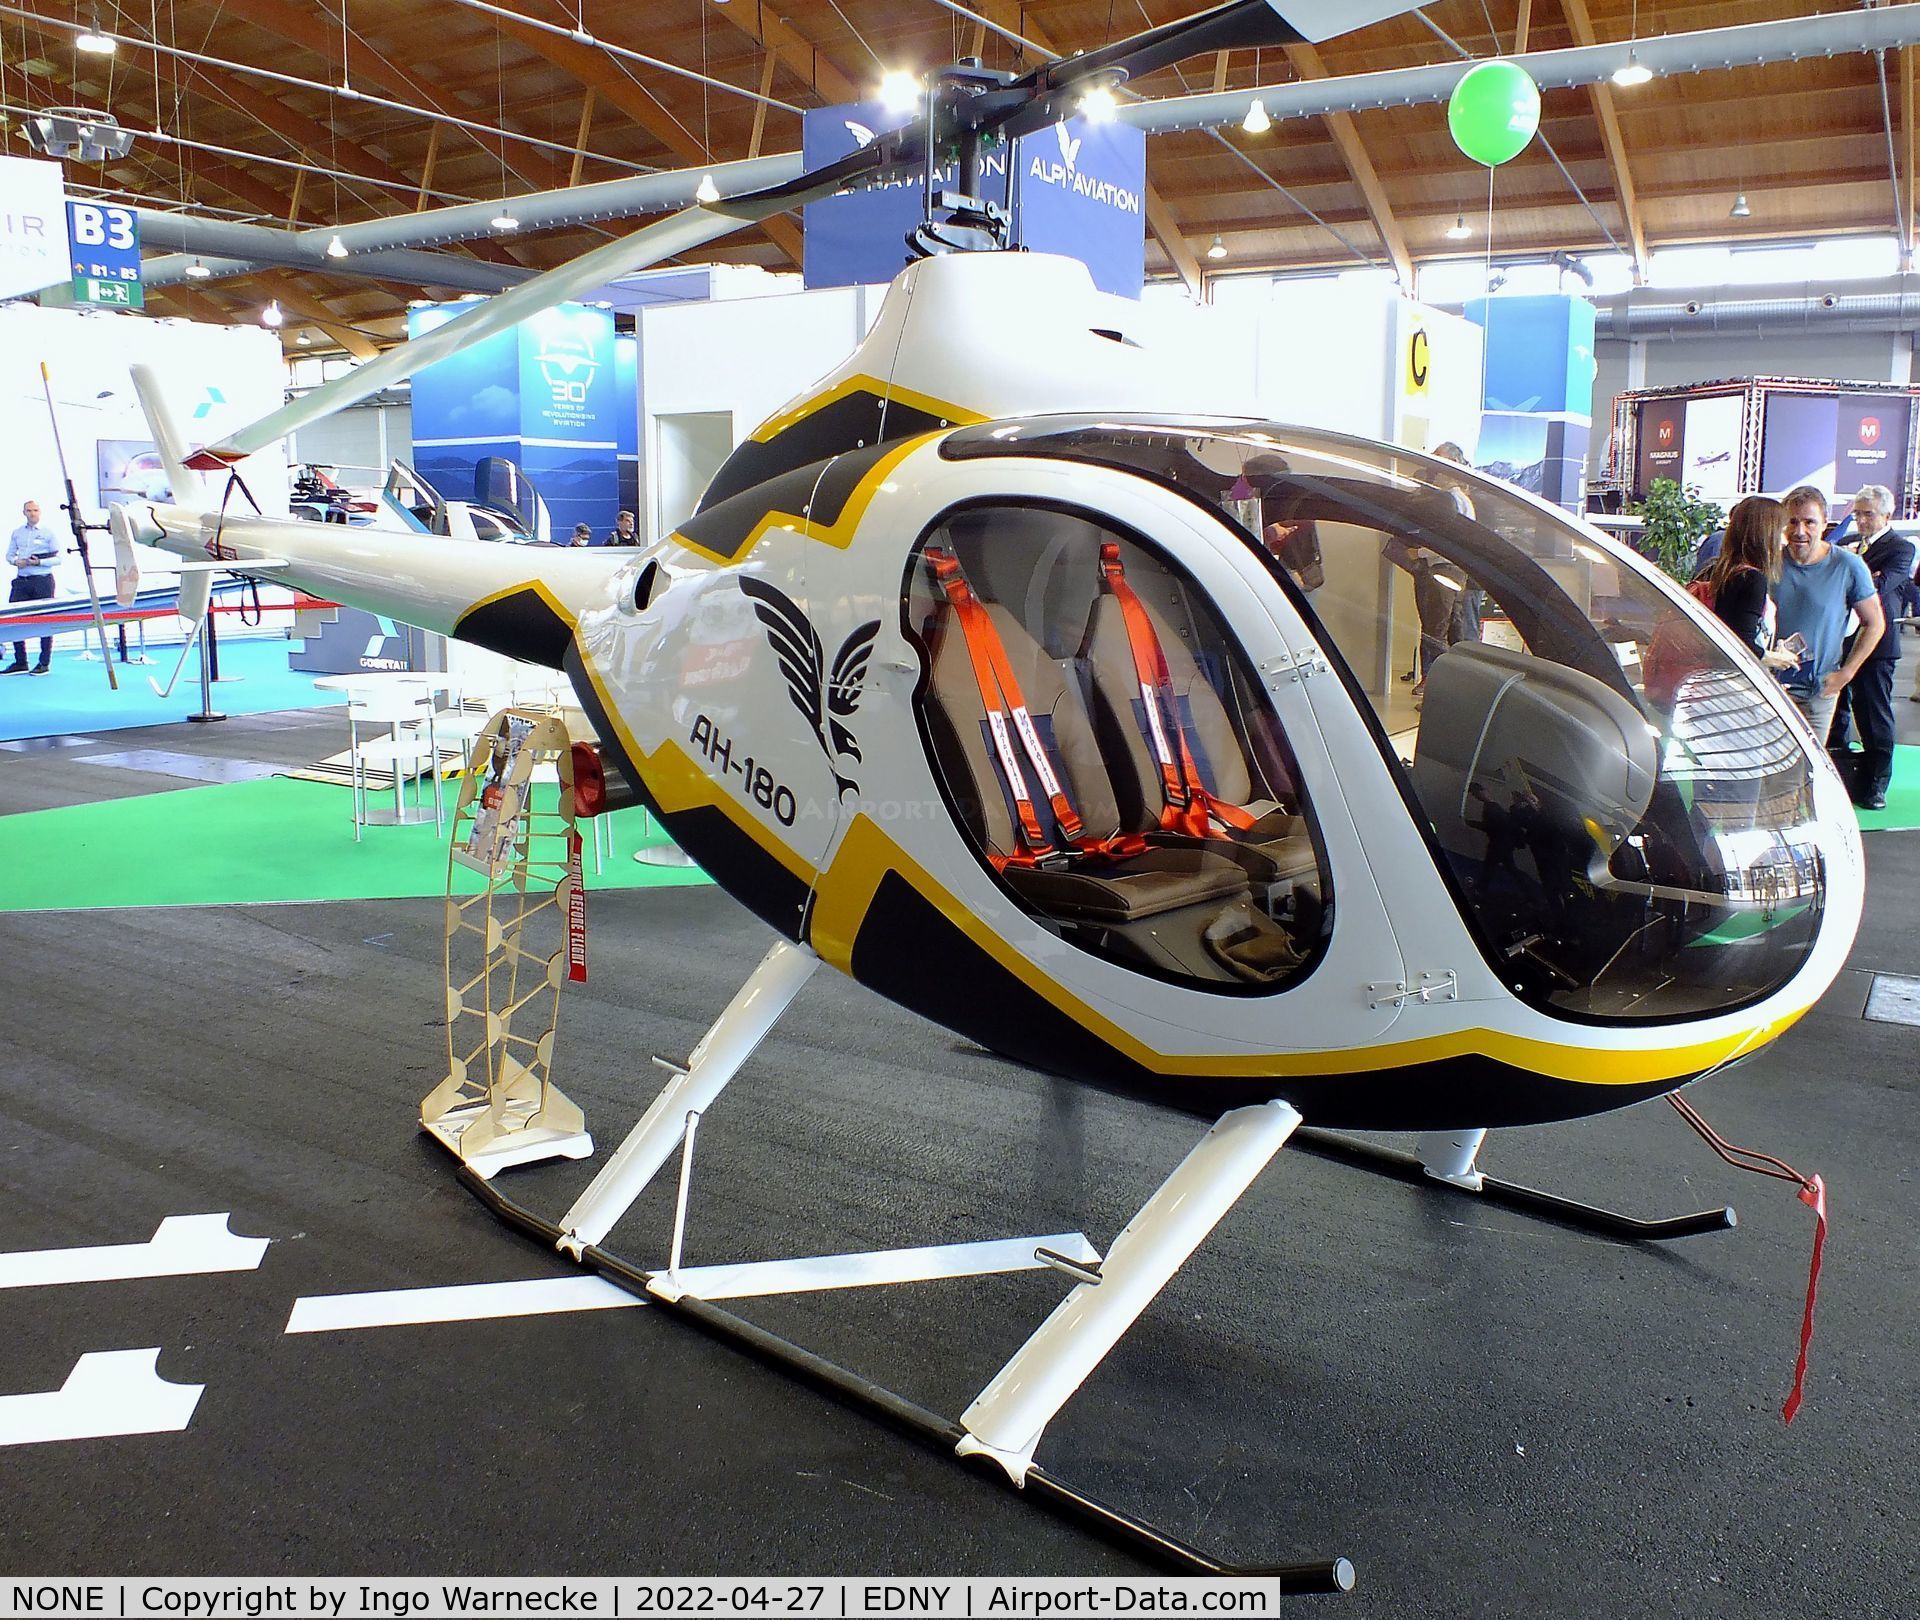 NONE, 2022 Alpi Aviation Syton AH180 C/N None, Alpi Aviation Syton AH180 prototype at the AERO 2022, Friedrichshafen